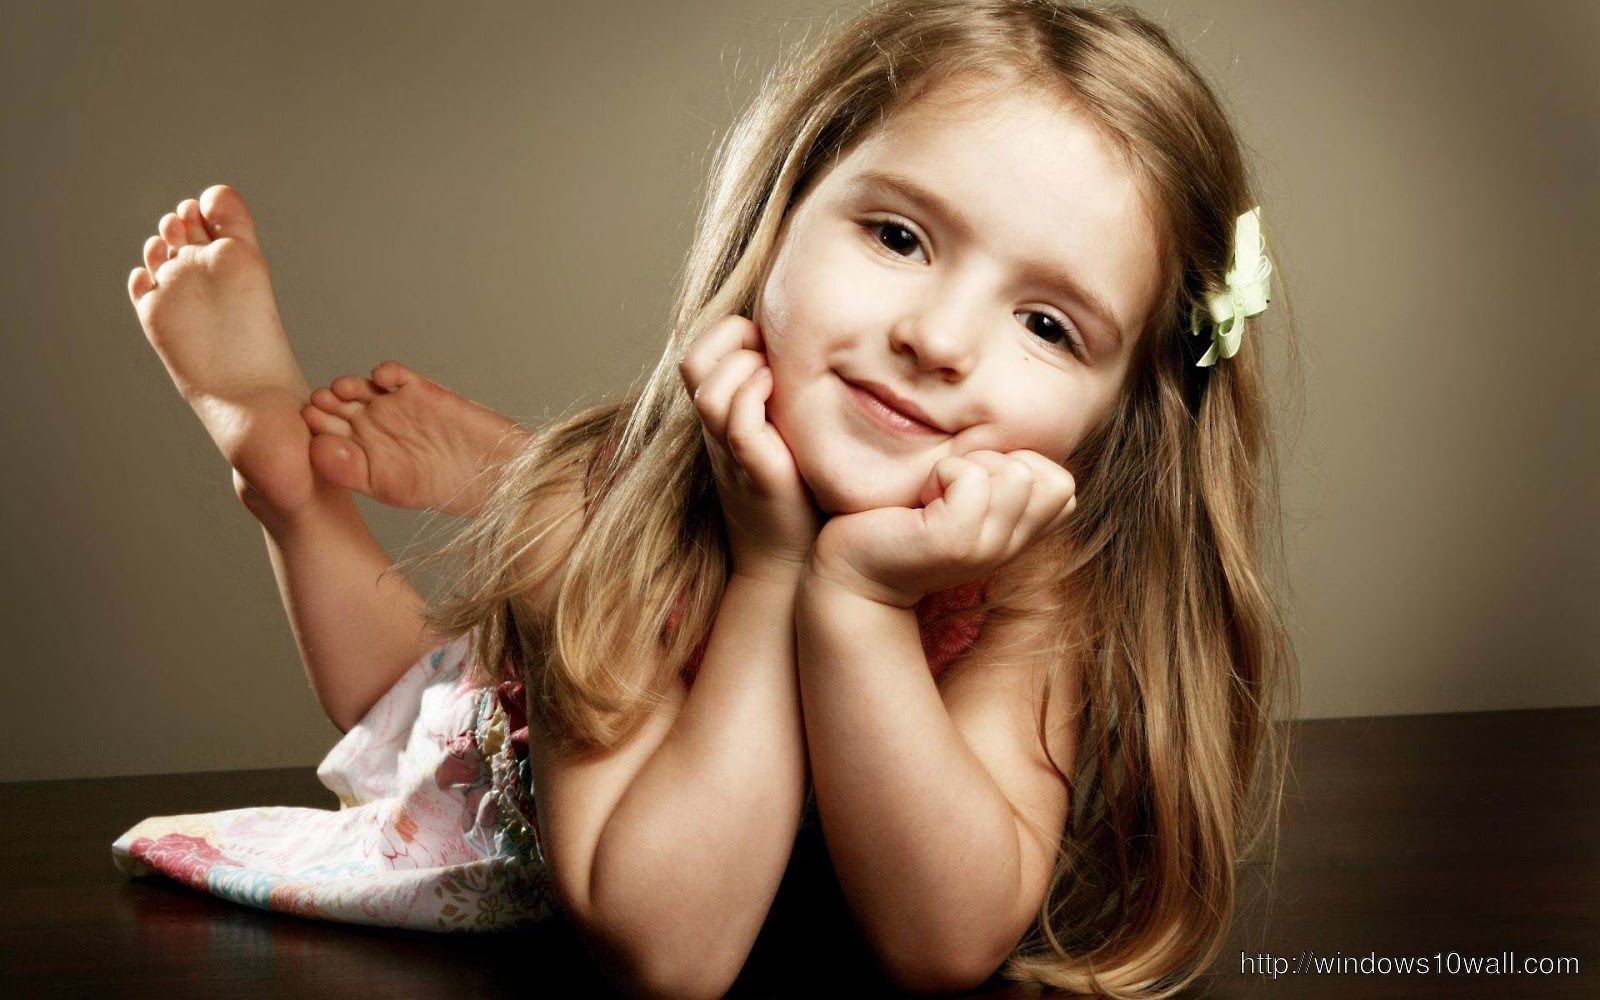 So Sweet Cute Baby Girl Wallpaper Girl Wallpaper Facebook Cover Wallpaper & Background Download